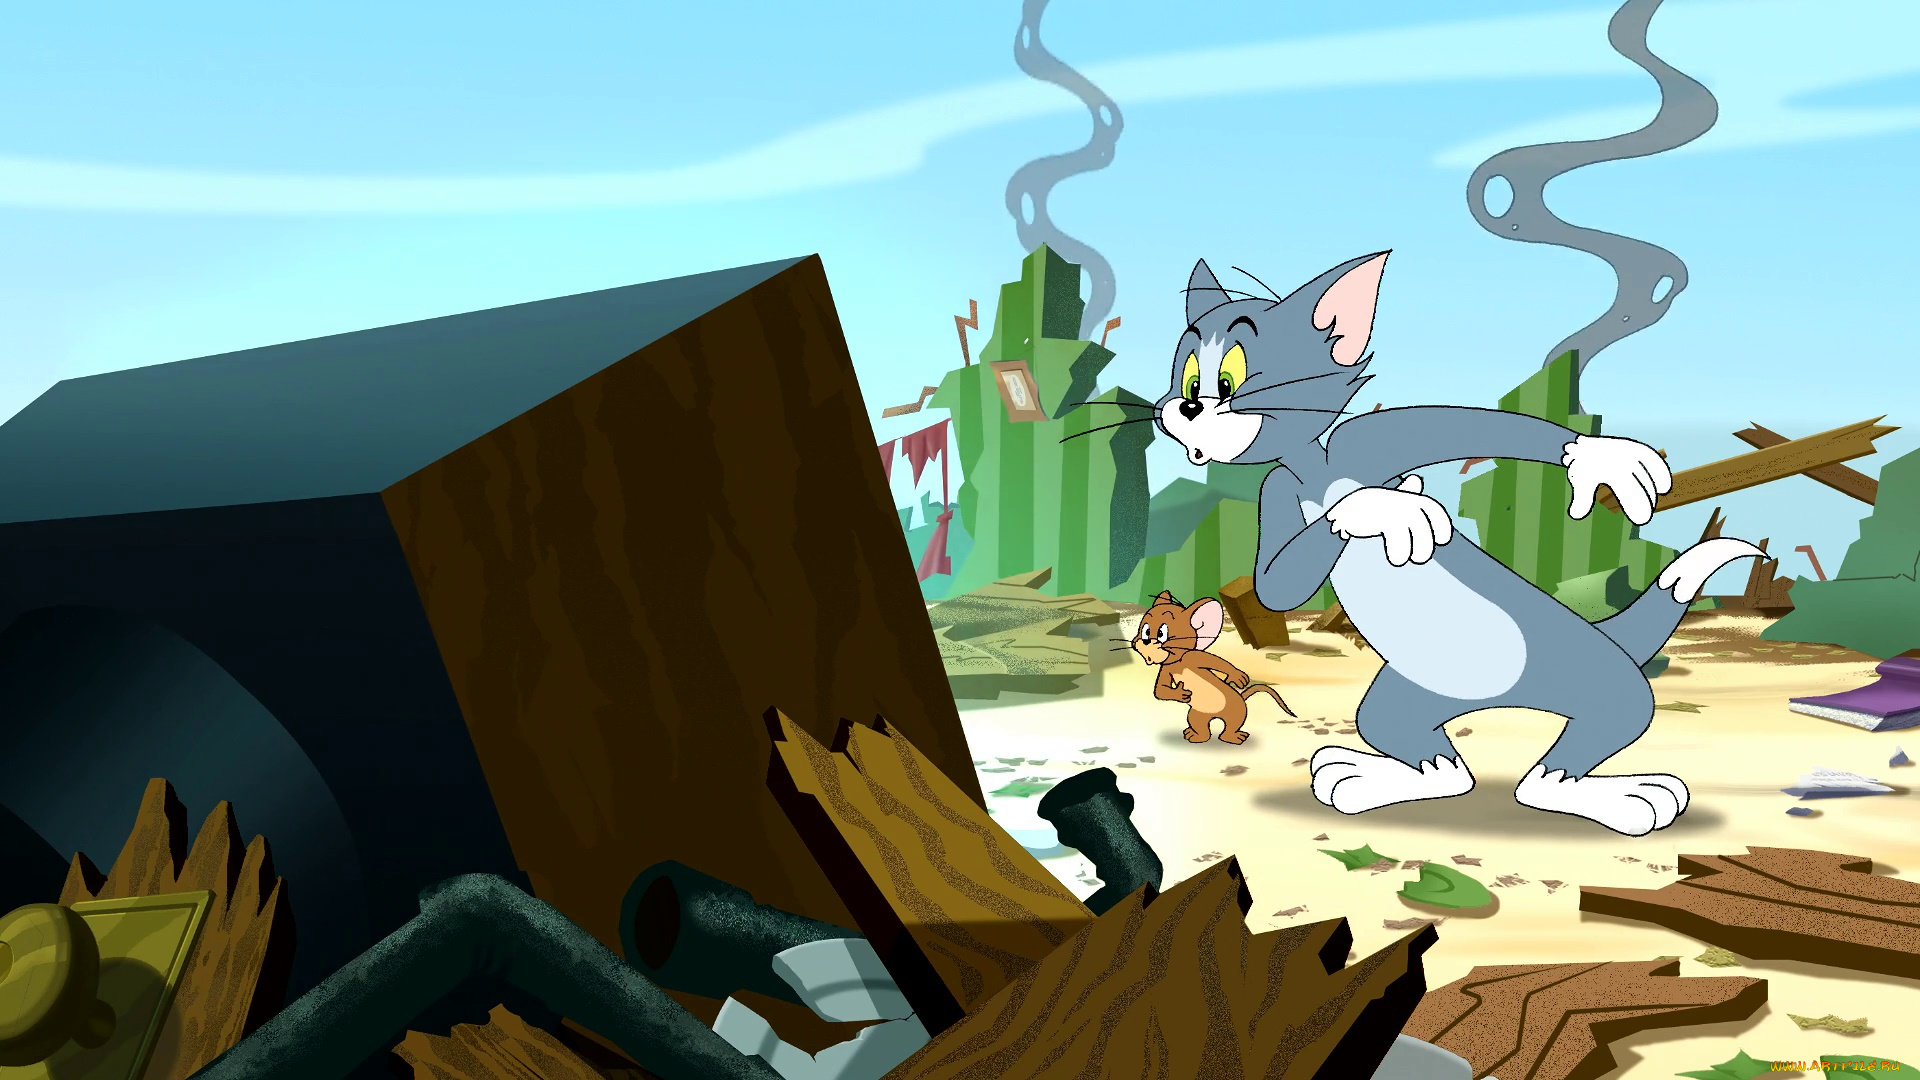 мультфильмы, tom, and, jerry, мышь, кот